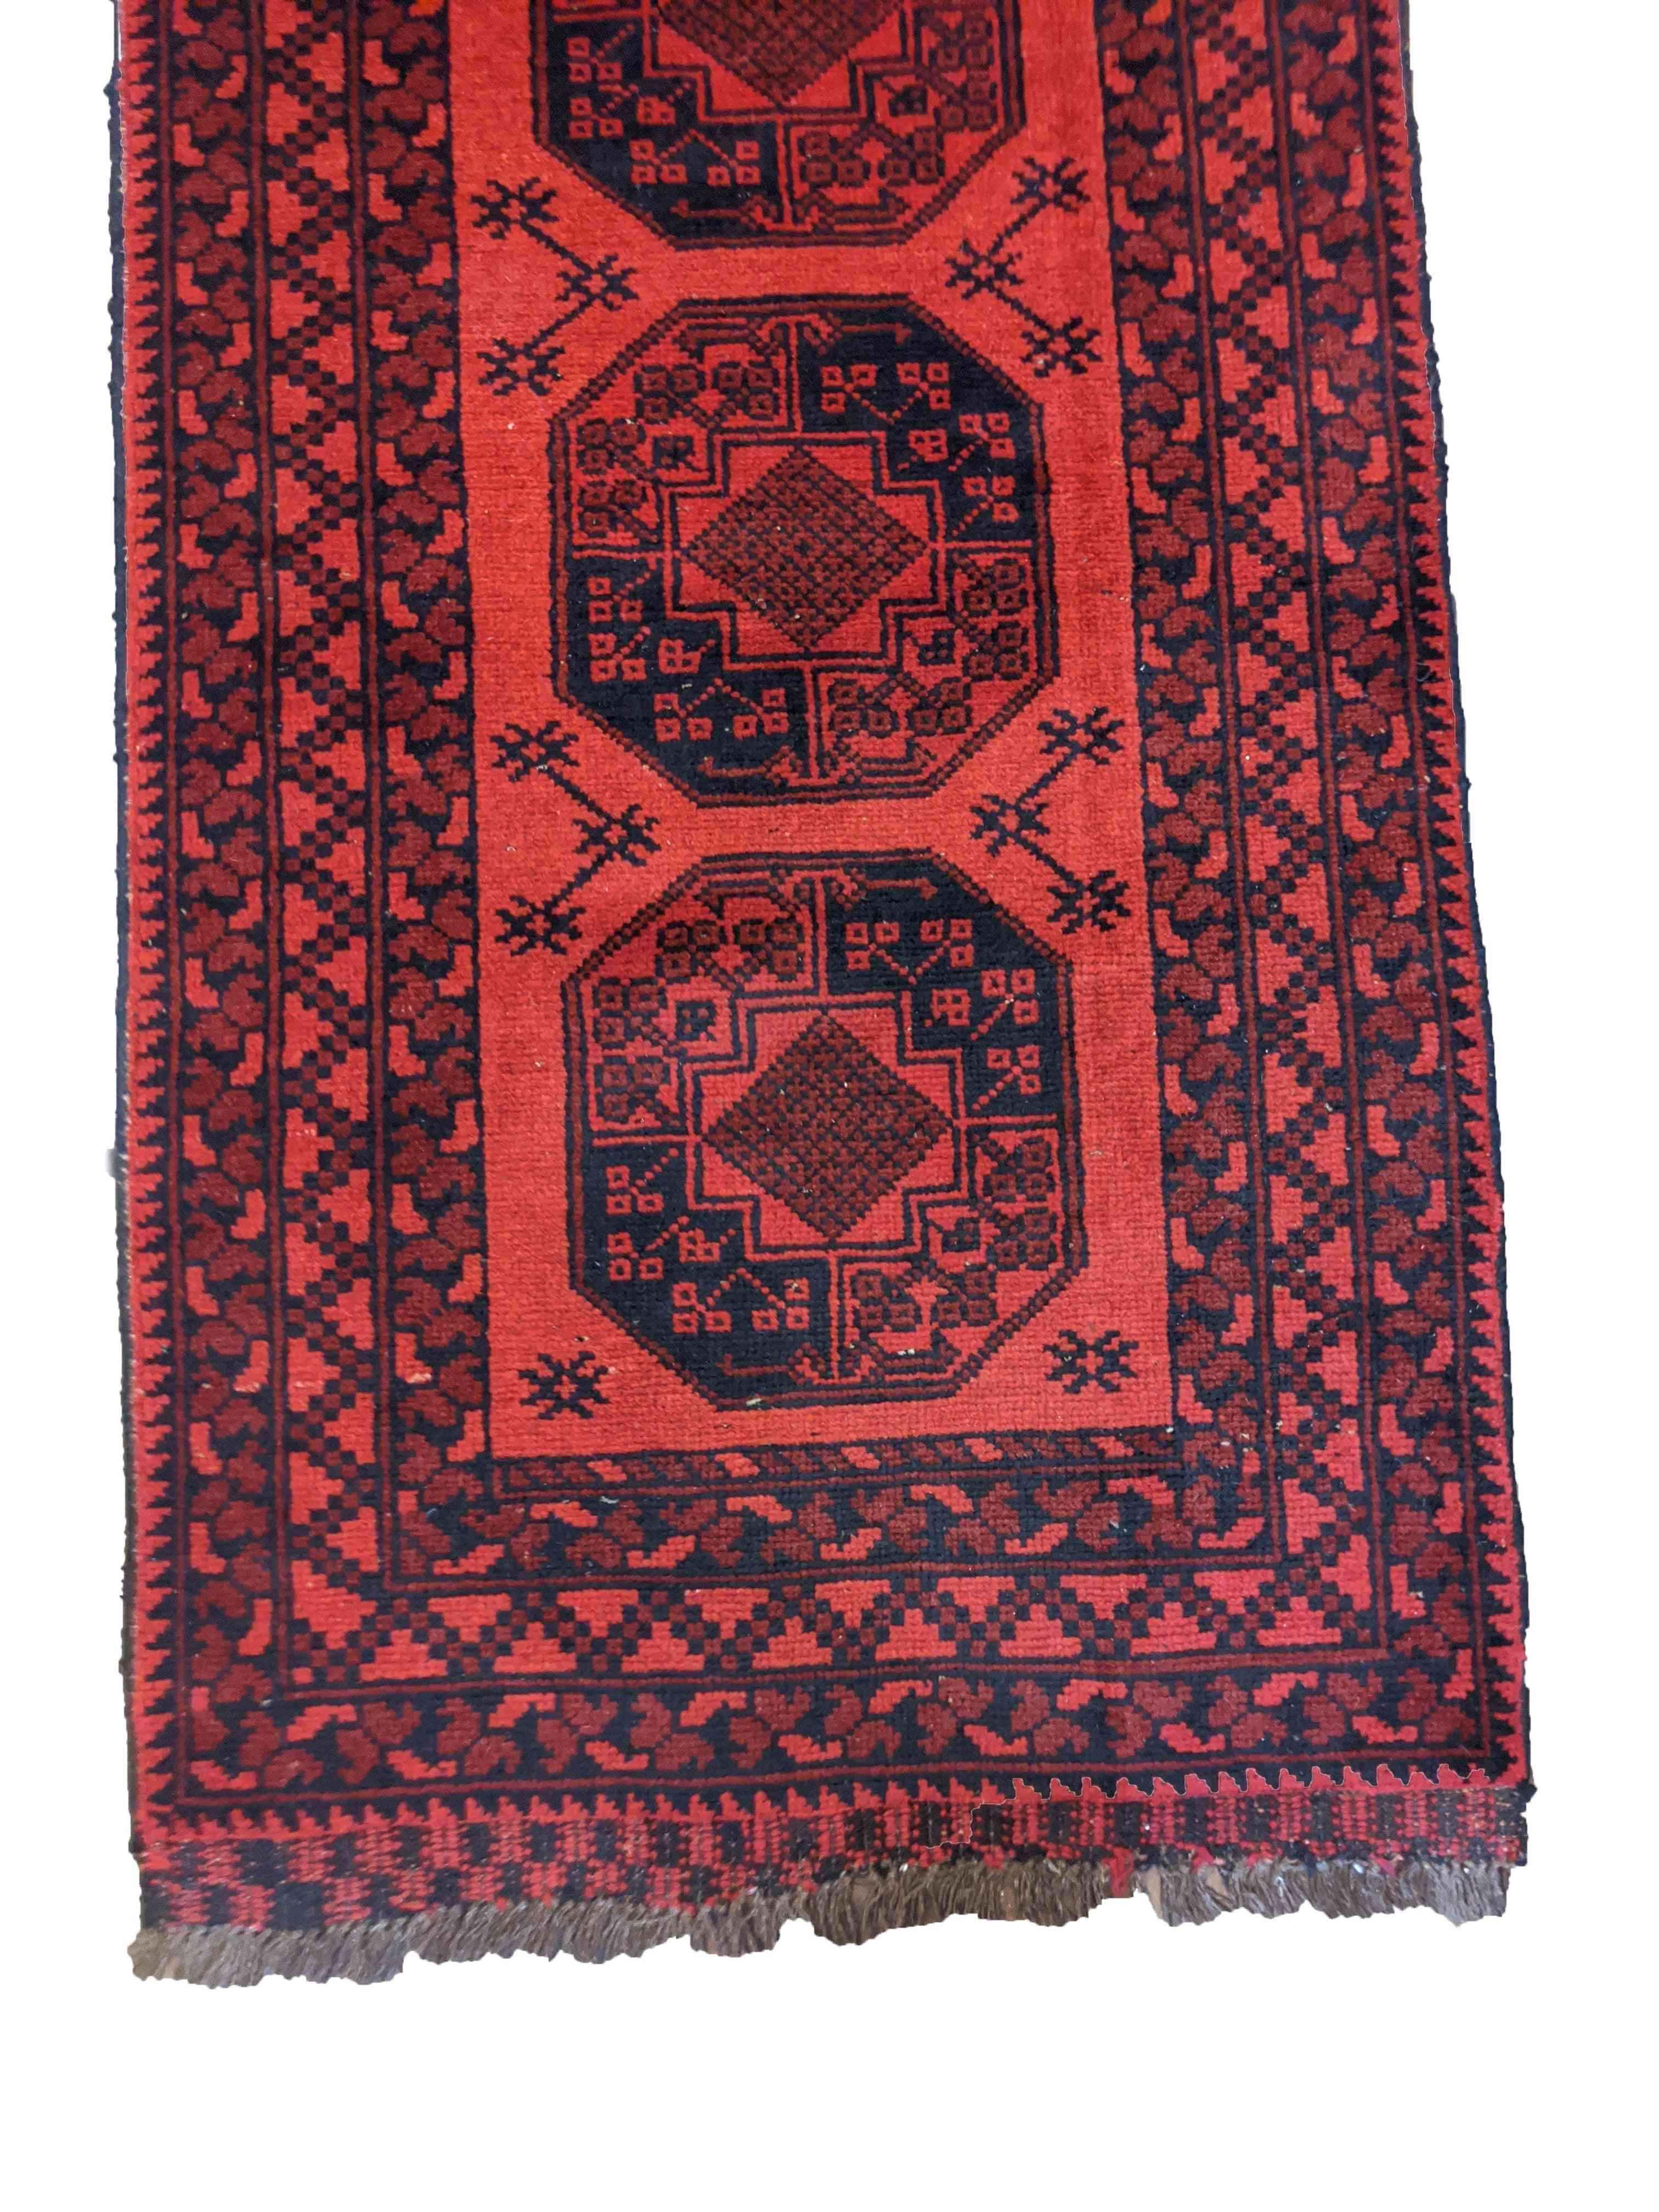 276 x 87 cm Red afghan Tribal Red Rug - Rugmaster